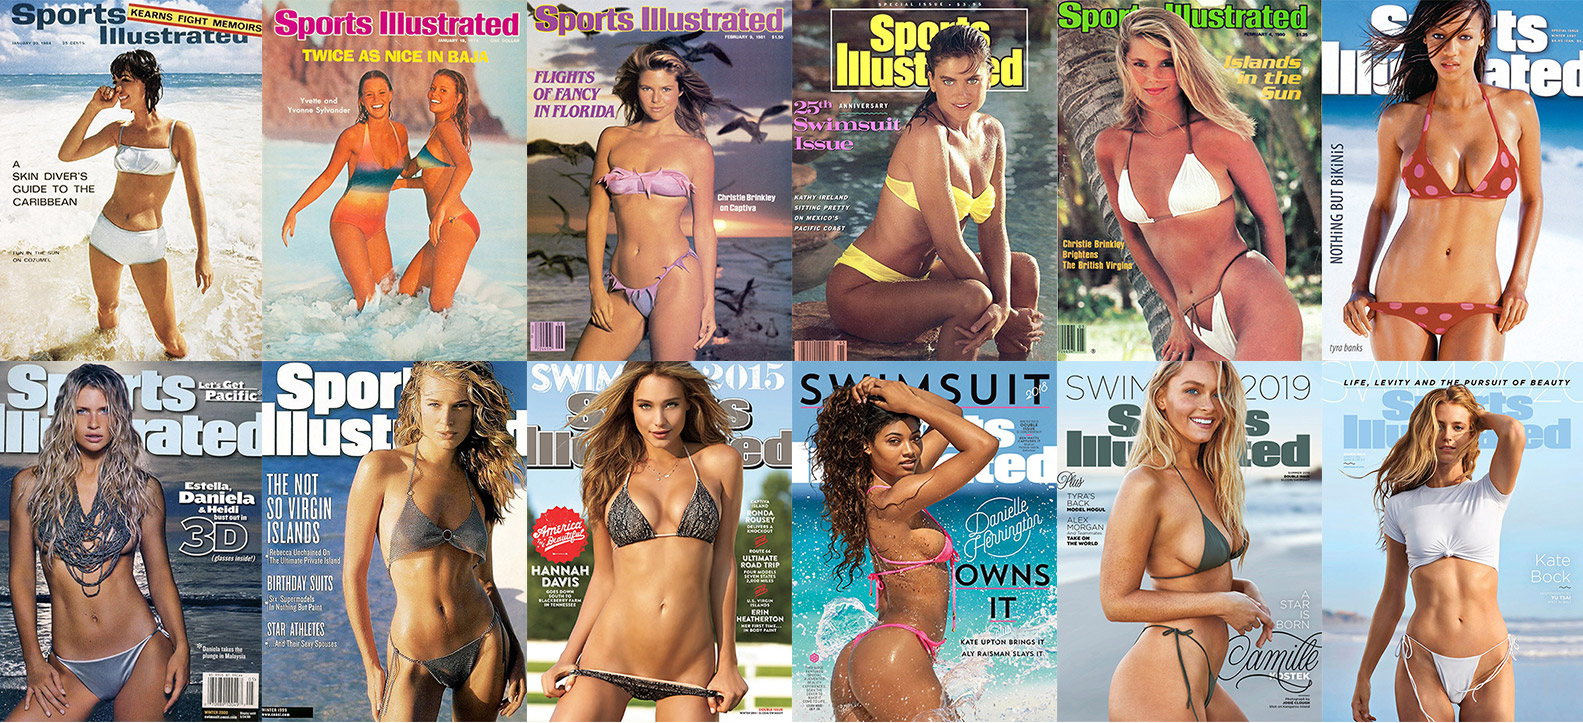 Celebrating Sports Illustrated’s Swimsuit Edition